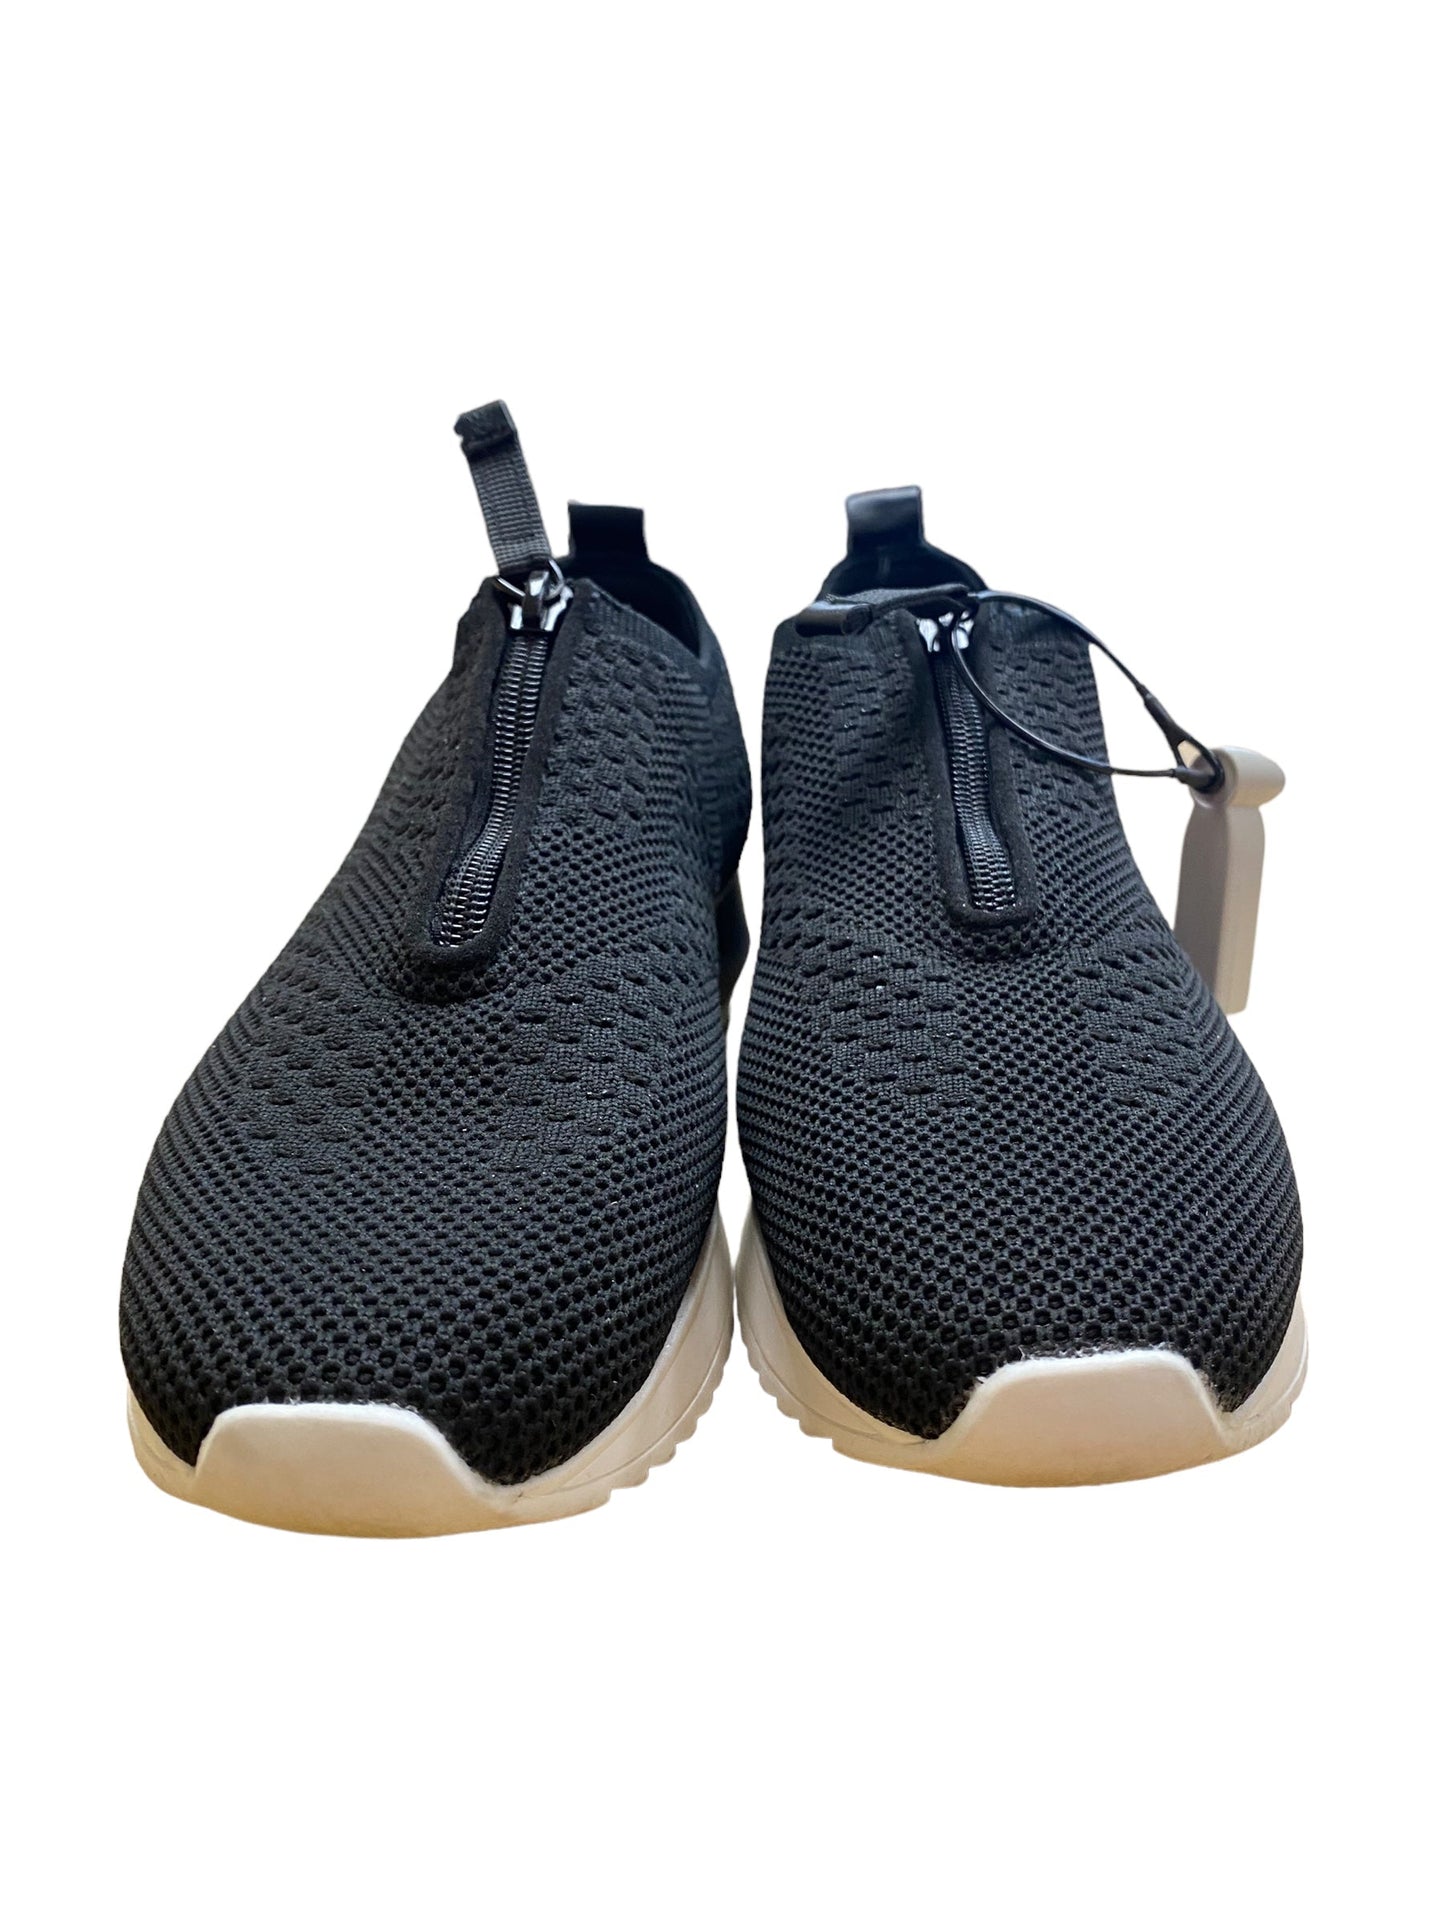 Black Shoes Flats Anne Klein, Size 7.5